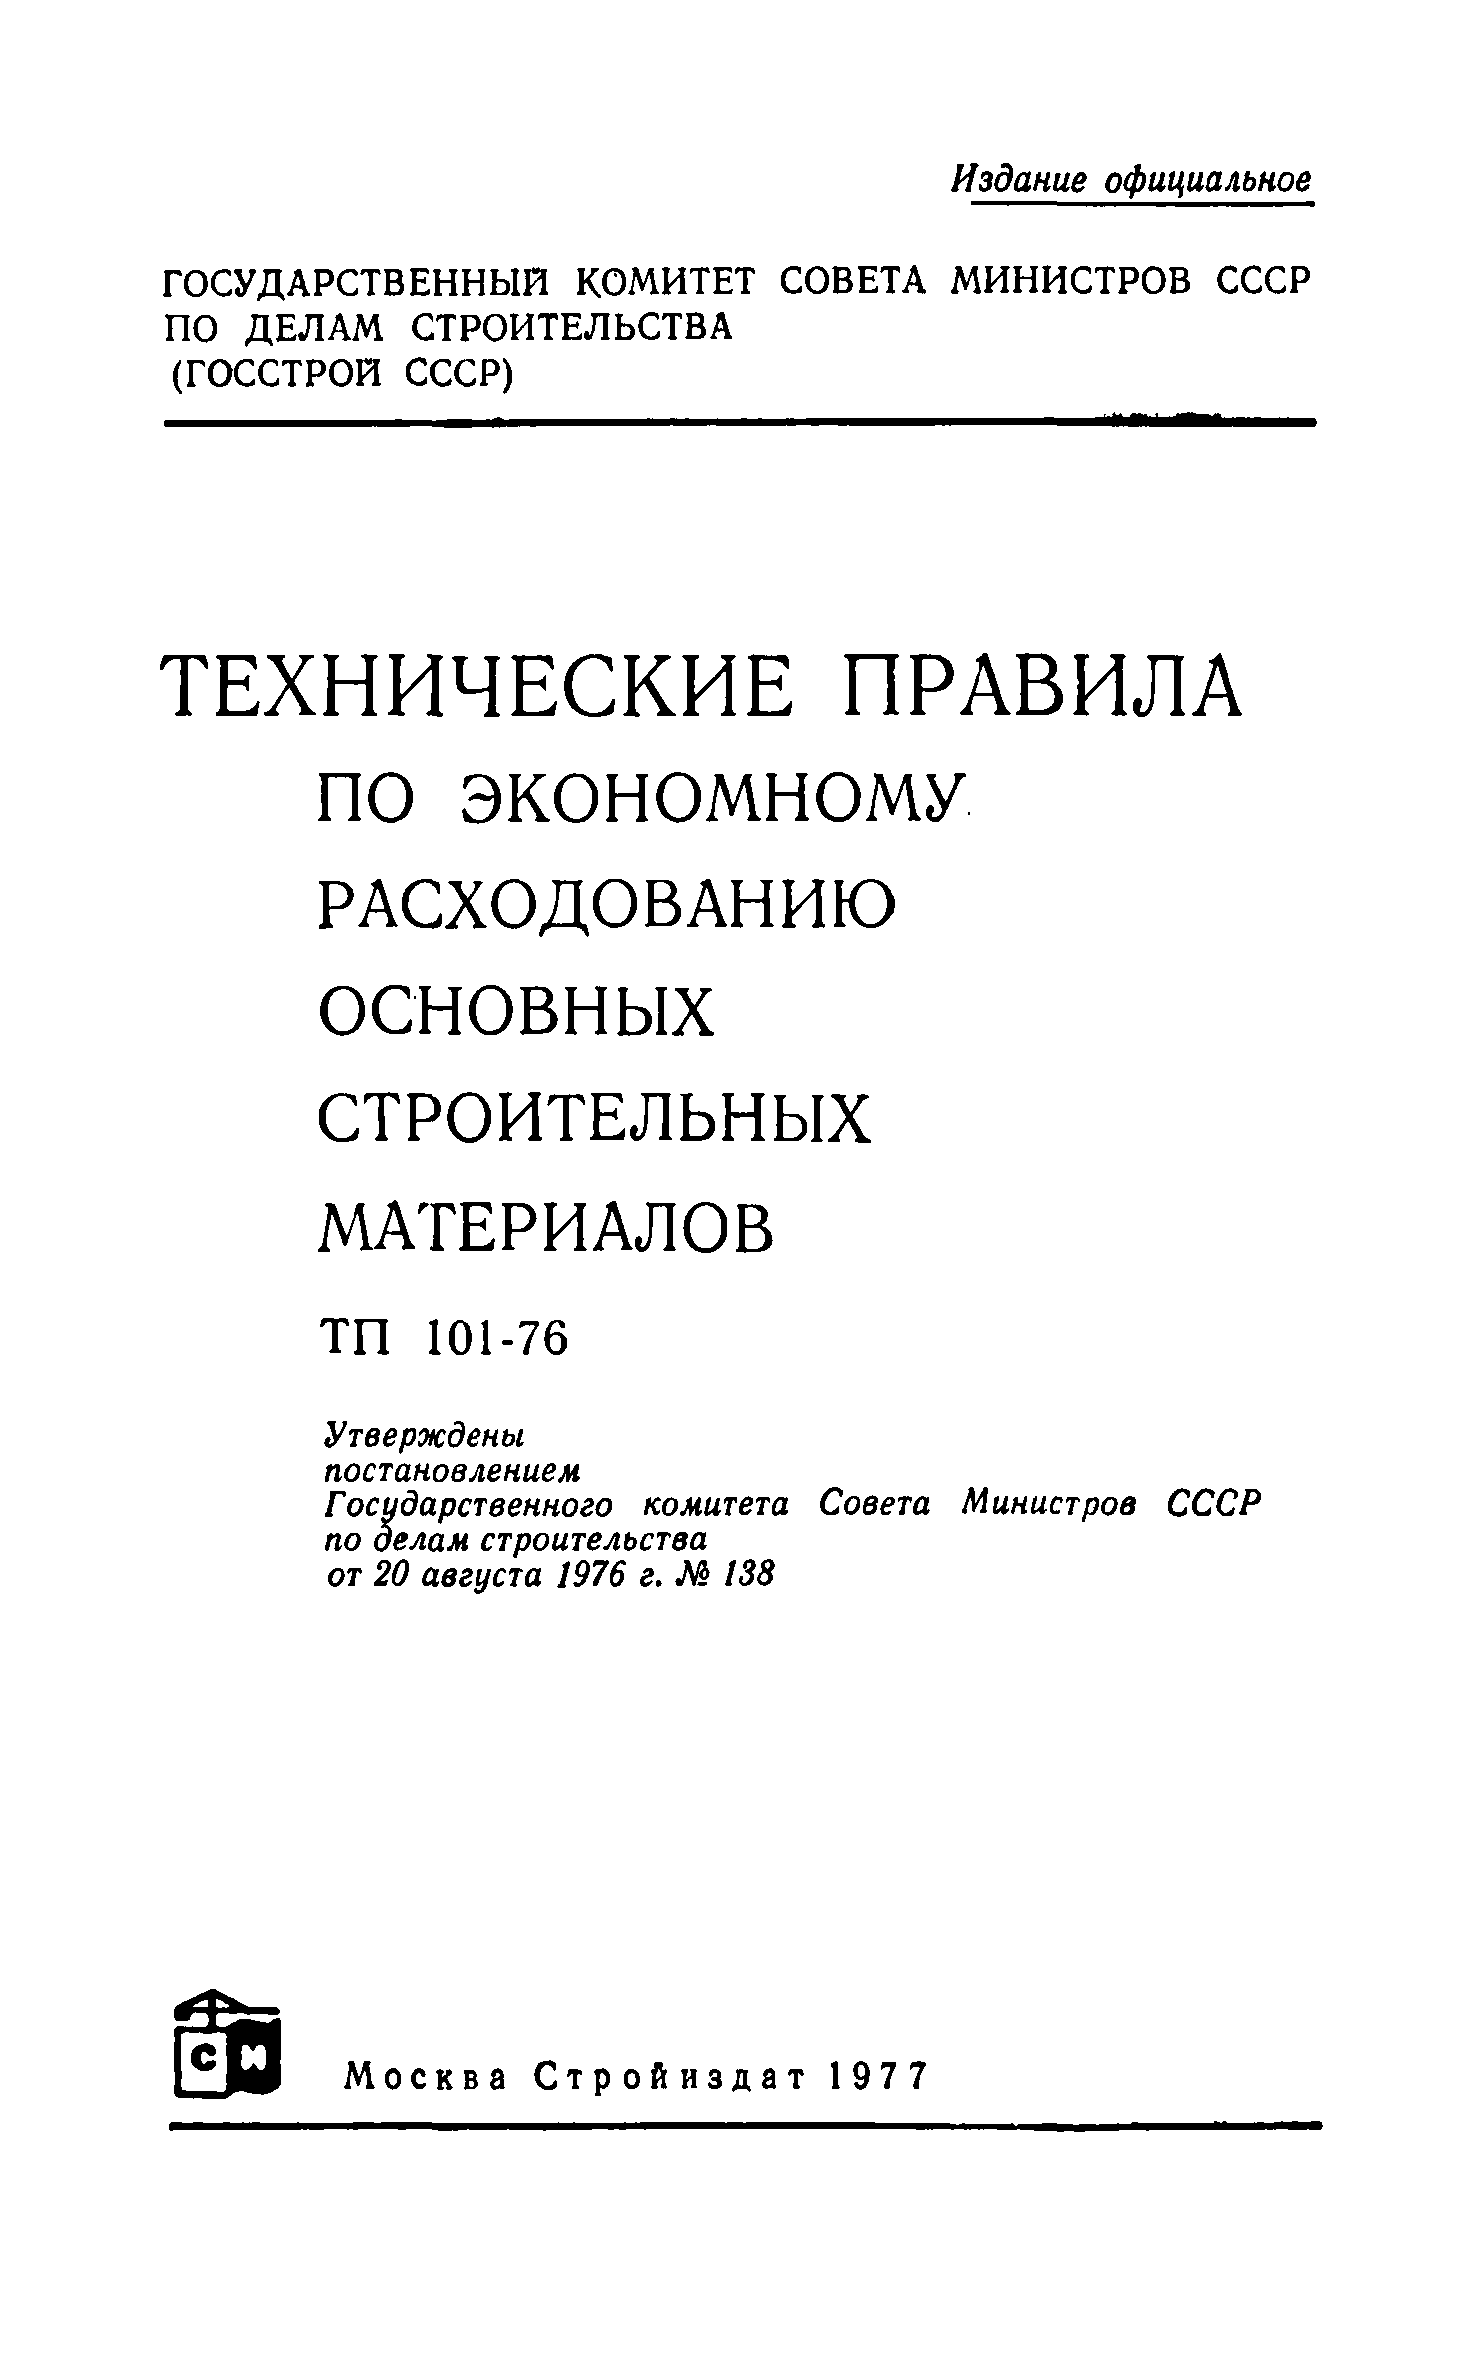 ТП 101-76